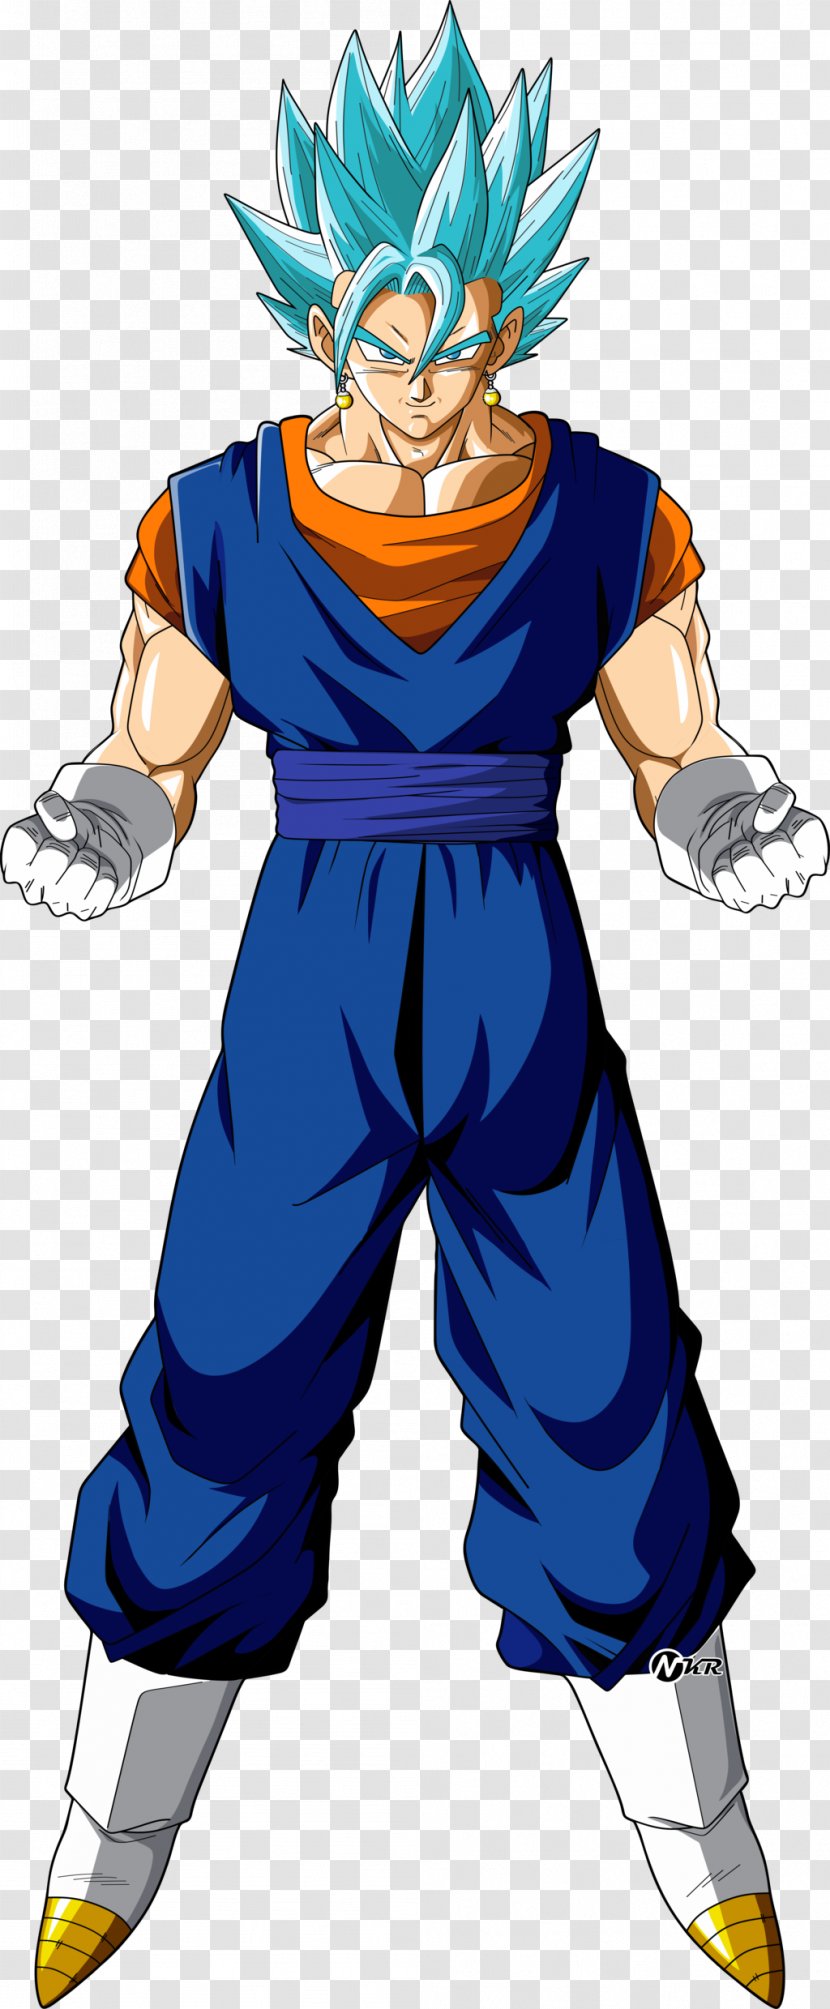 Vegeta Goku Trunks Frieza Super Saiya - Silhouette - Blue Characters Transparent PNG